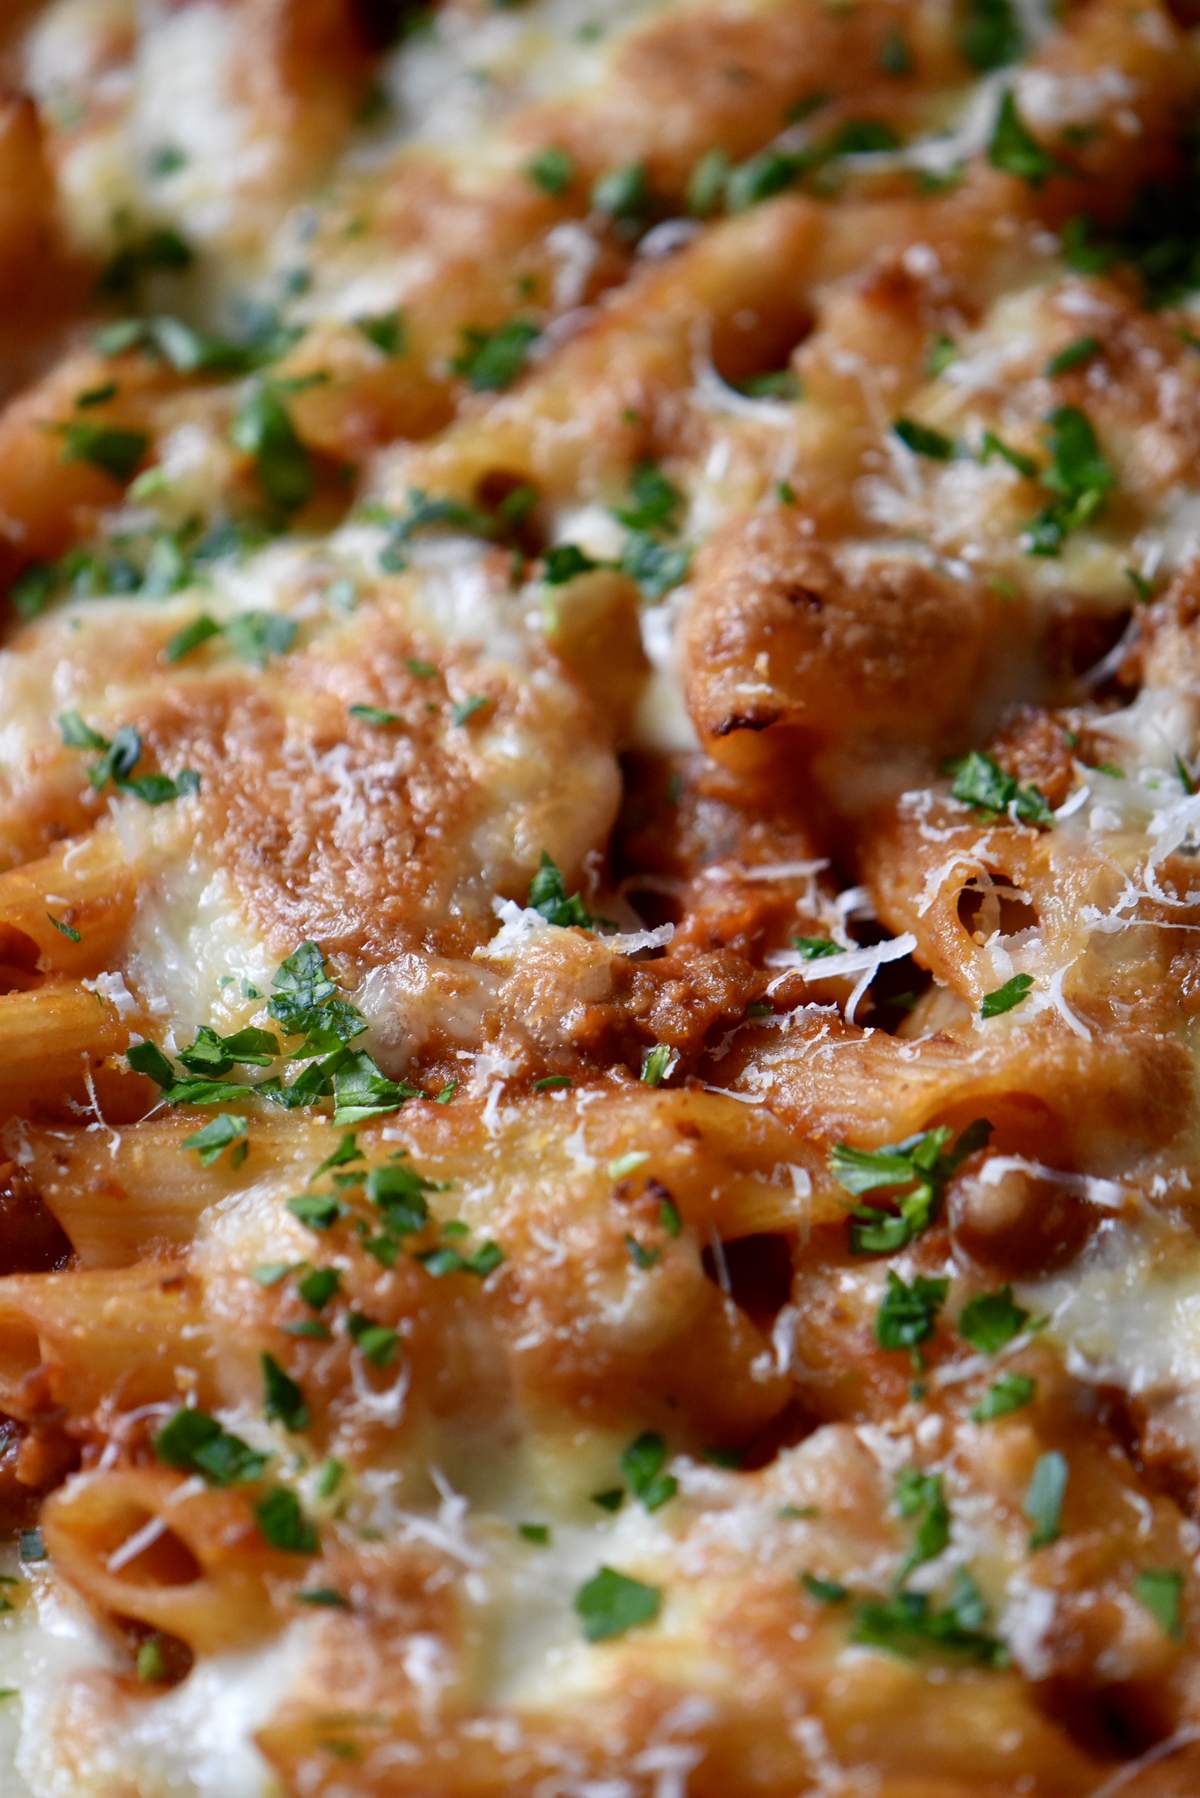 A close up of mozzarella on baked pasta.